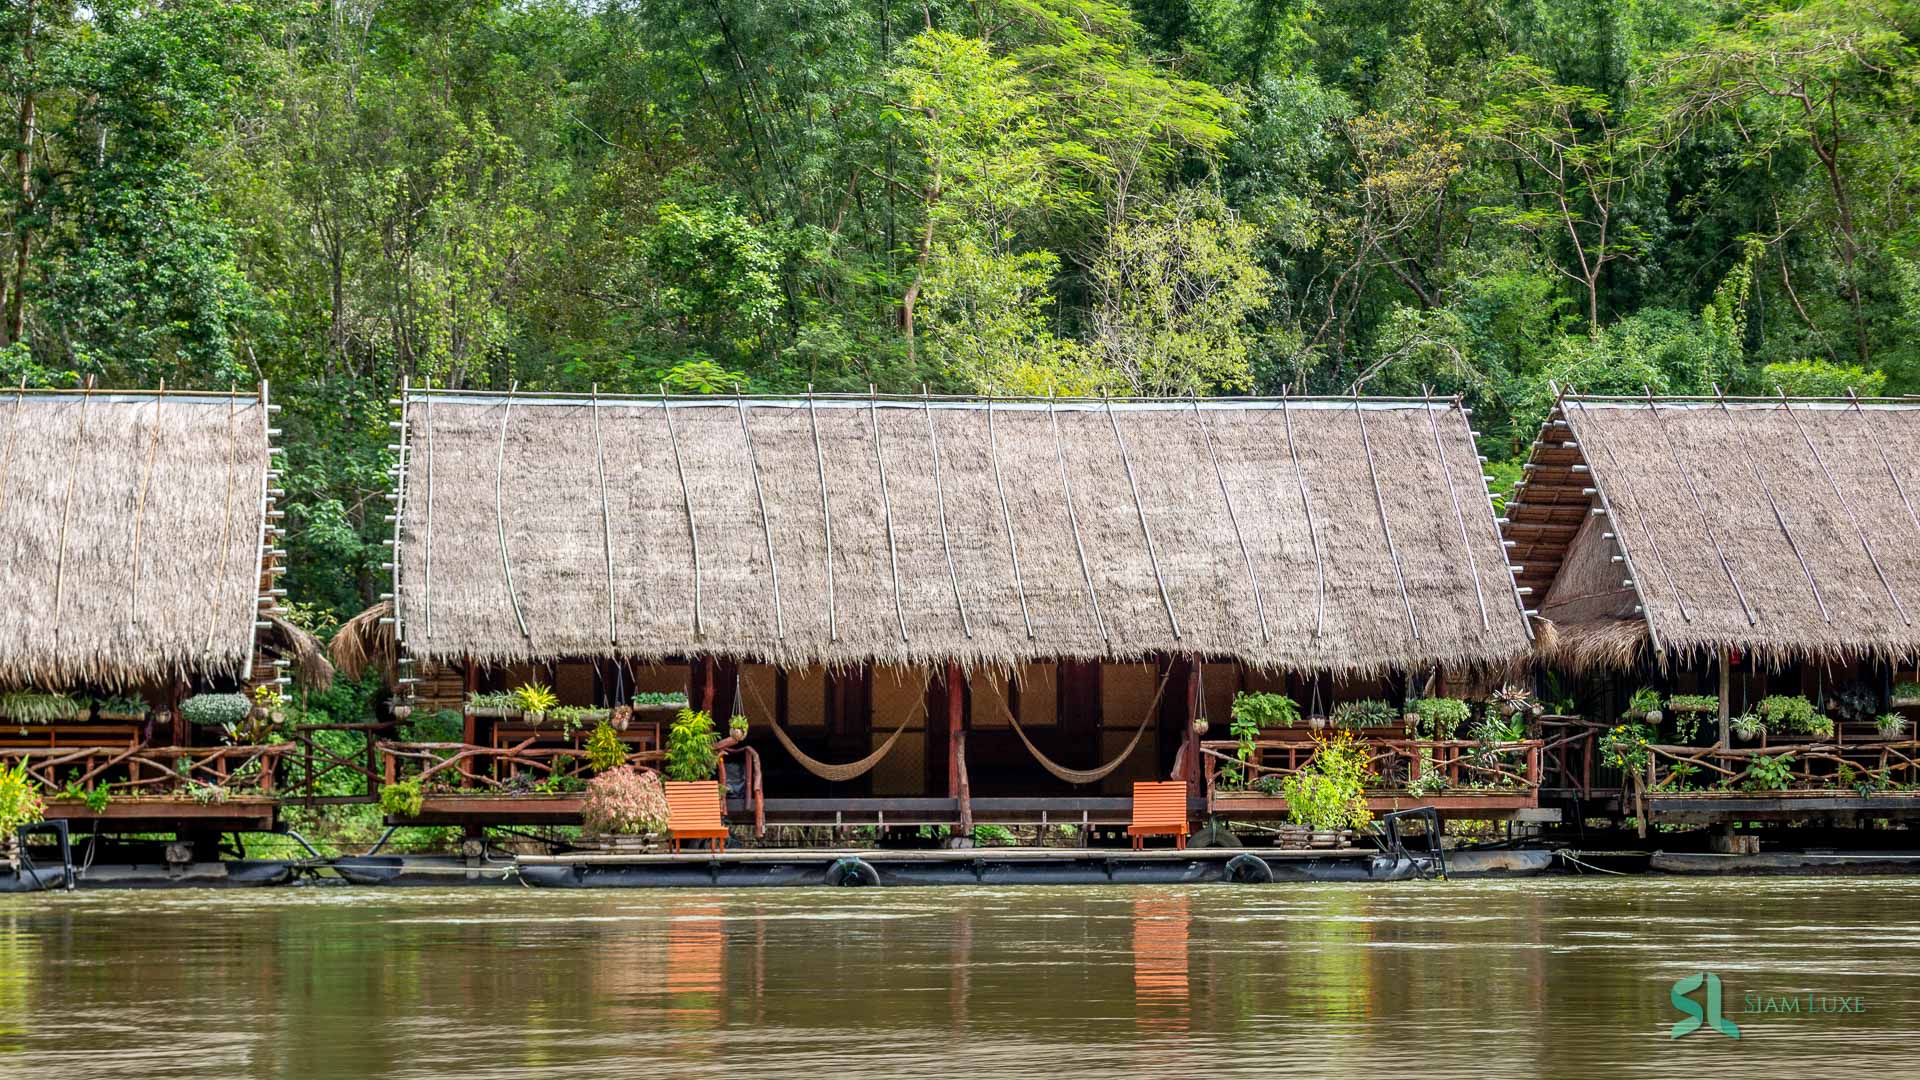 The Floating Resort 'River Kwai Jungle Rafts' in Kanchanaburi